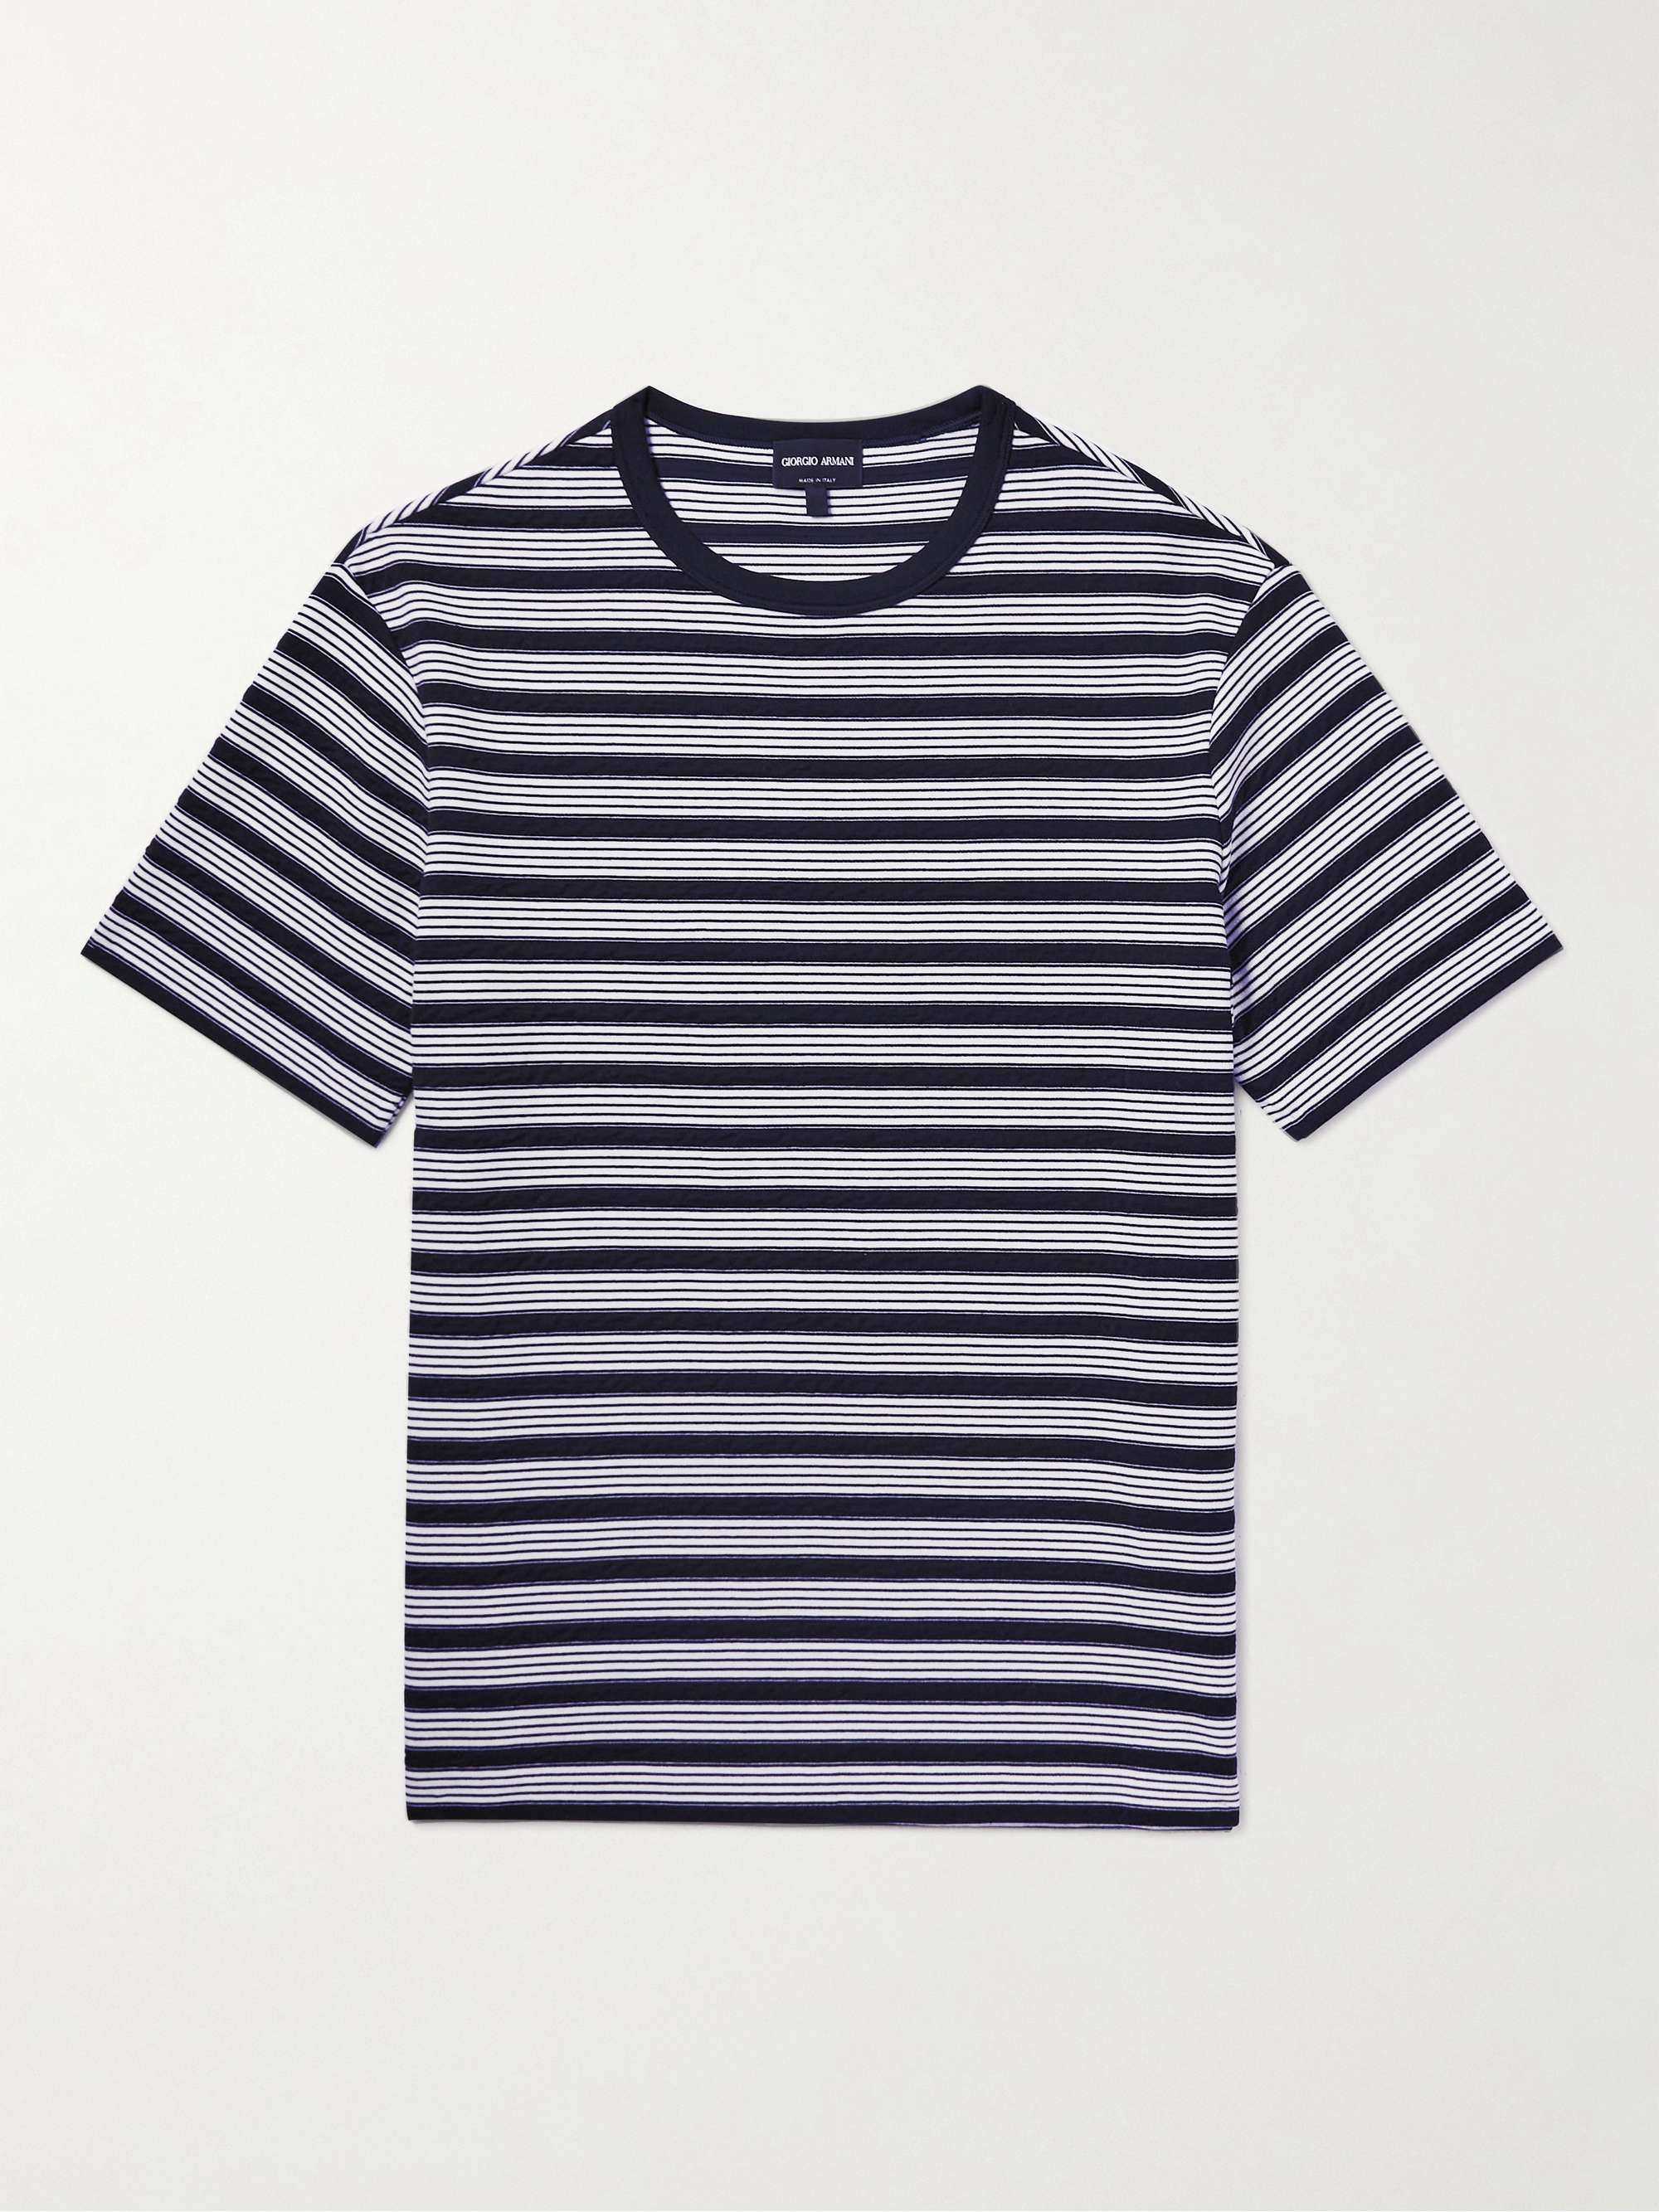 GIORGIO ARMANI Striped Cotton-Blend Jersey T-Shirt